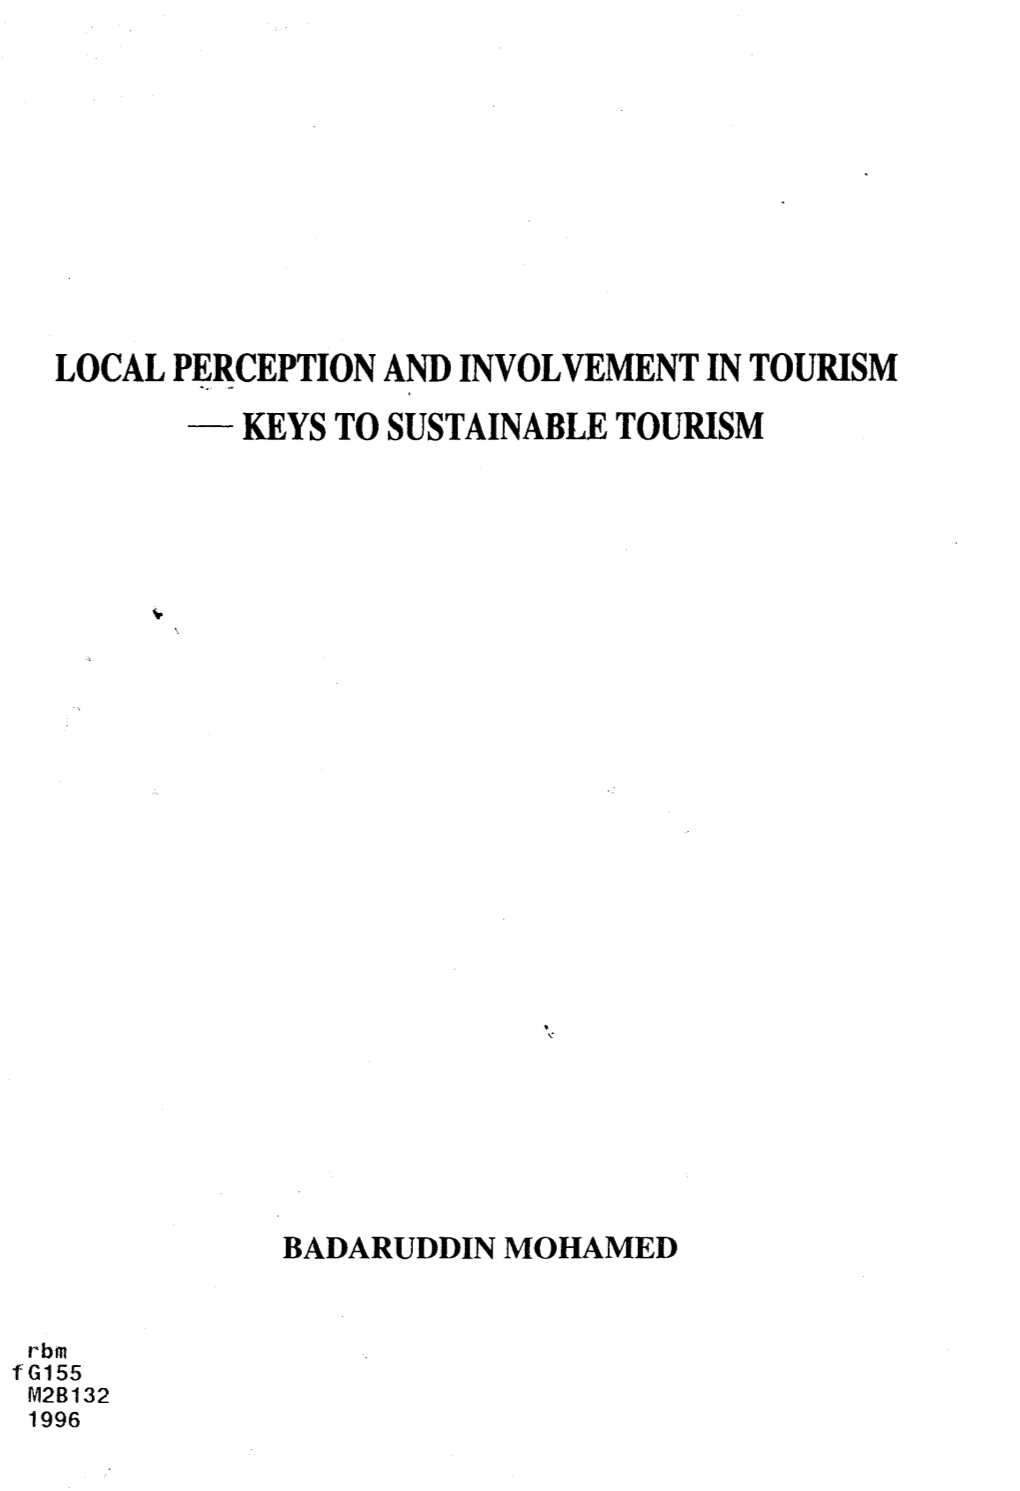 Keys to Sustainable Tourism